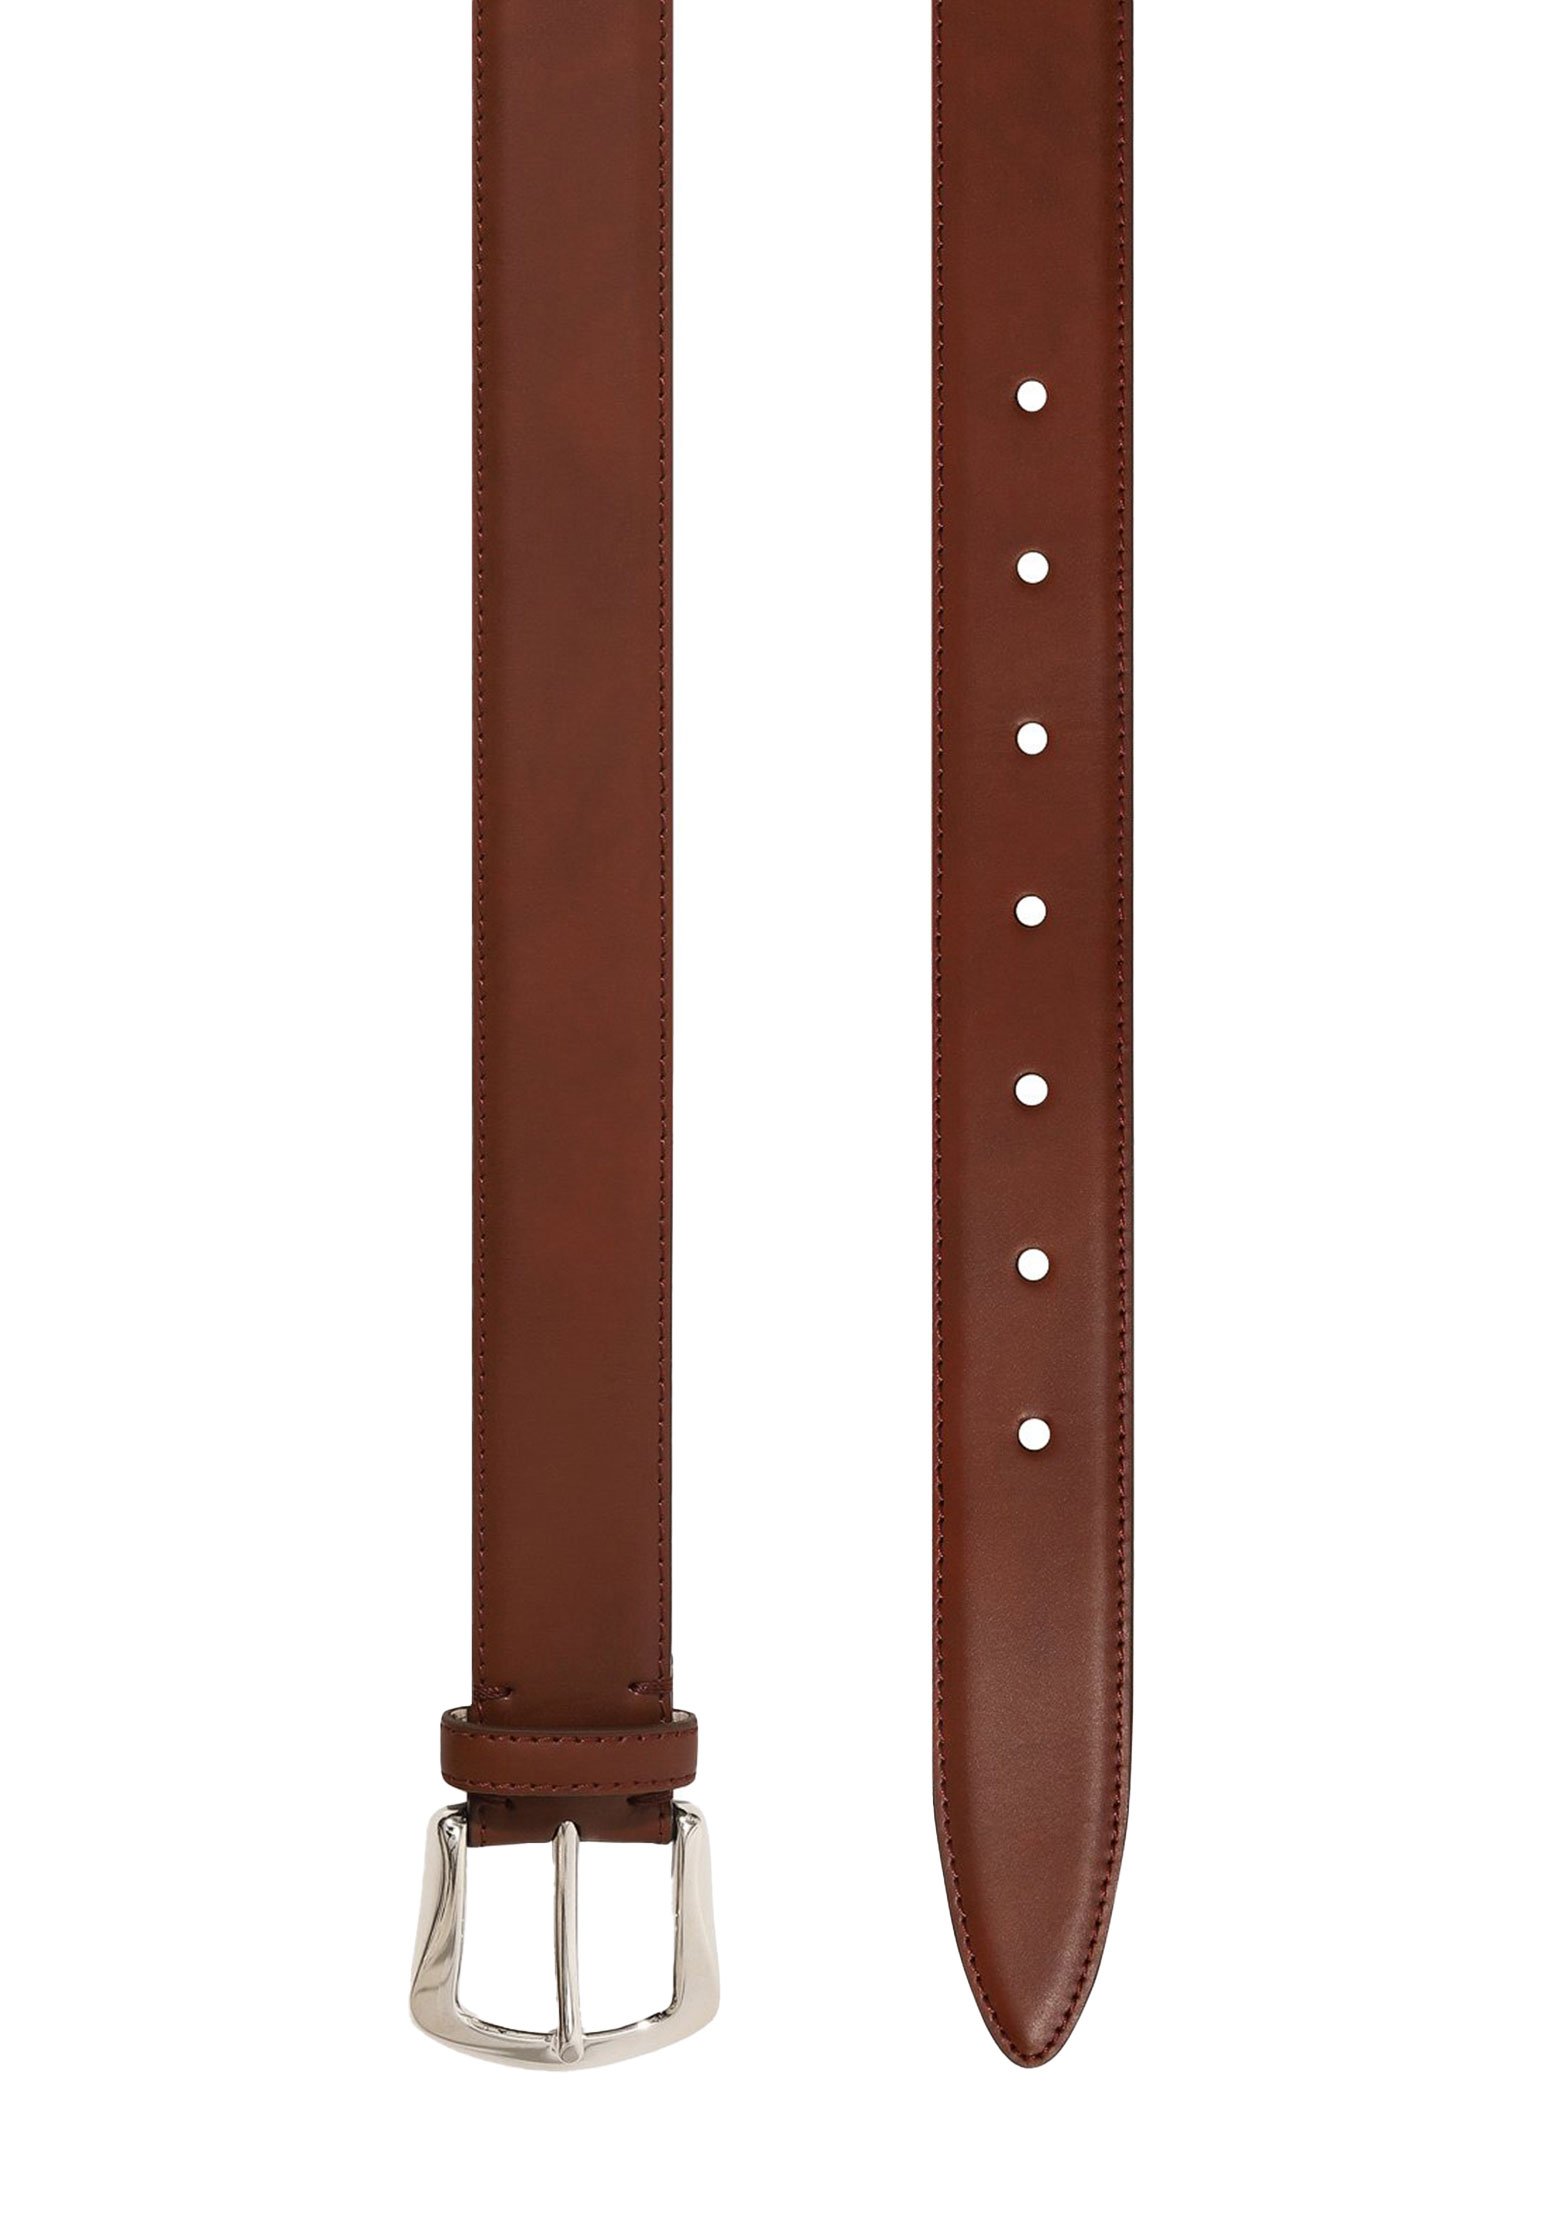 Belt BRUNELLO CUCINELLI Color: brown (Code: 1522) in online store Allure